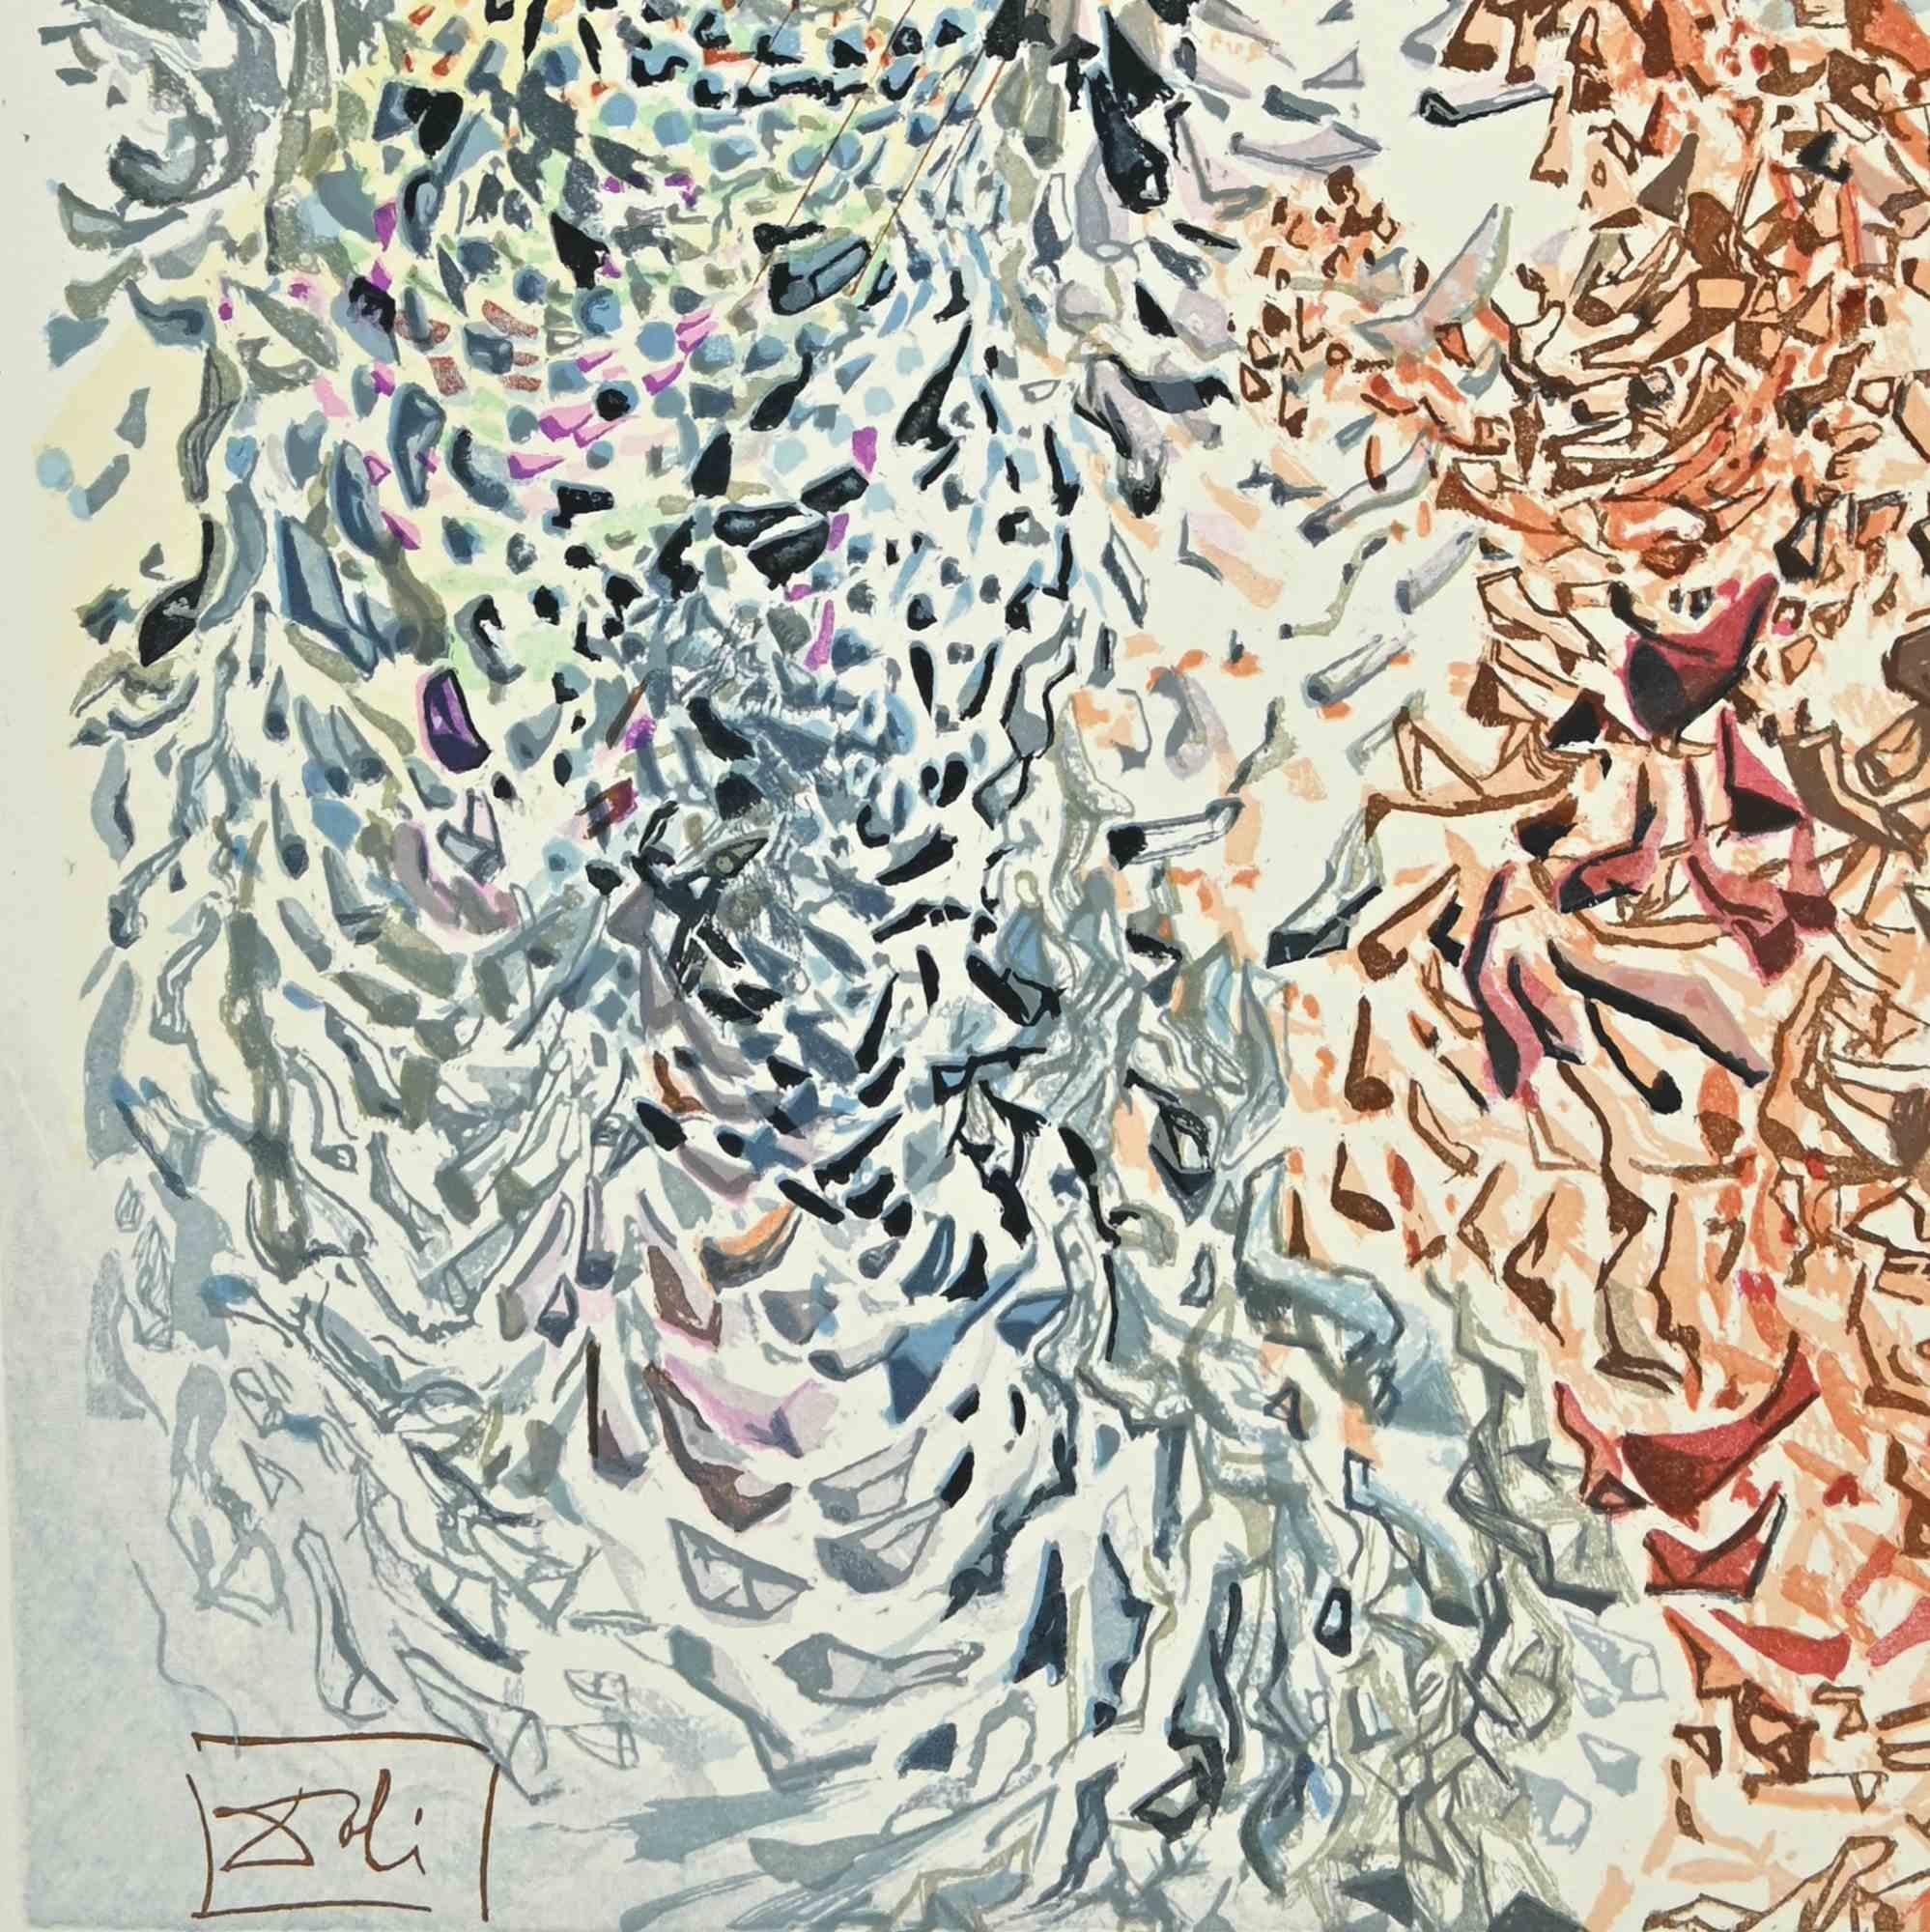 Dust of Souls - Woodcut print - 1963 - Print by Salvador Dalí